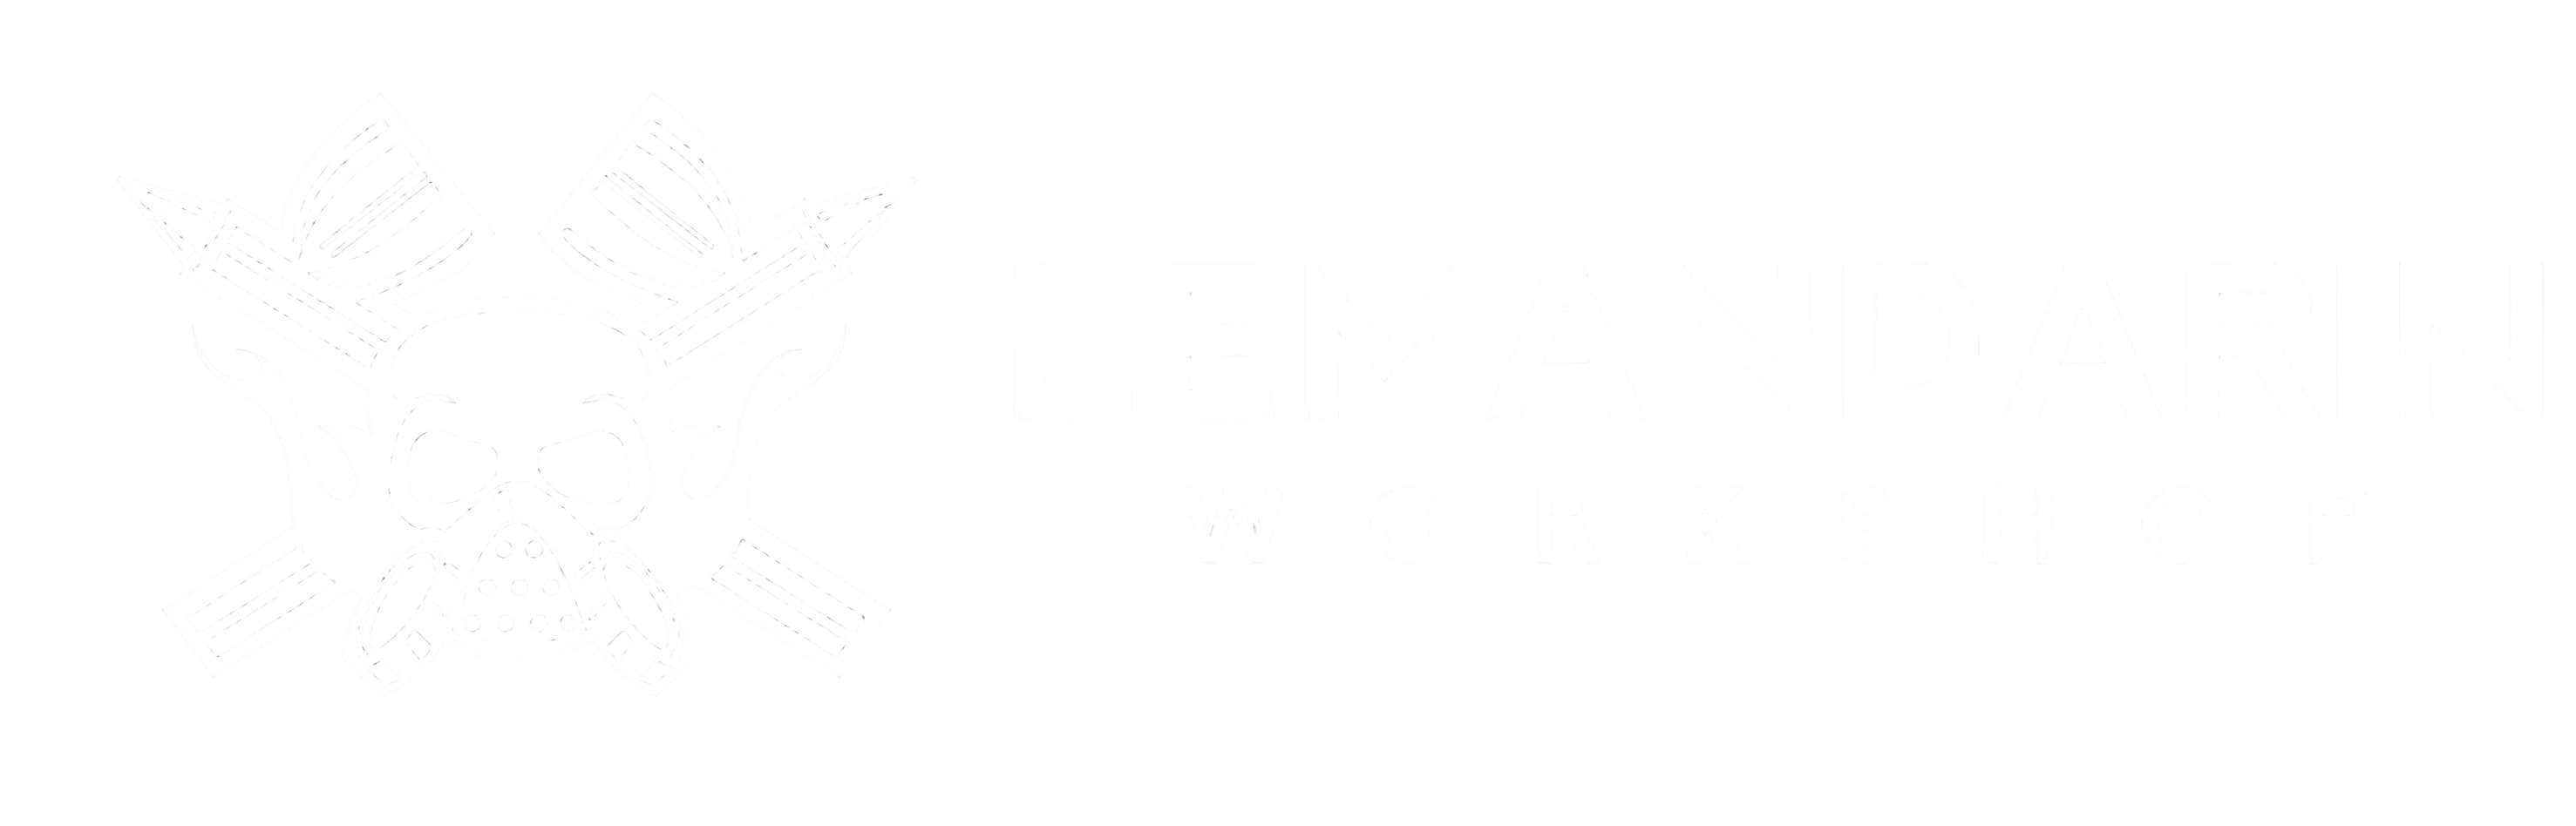 Lemandarin Workshop